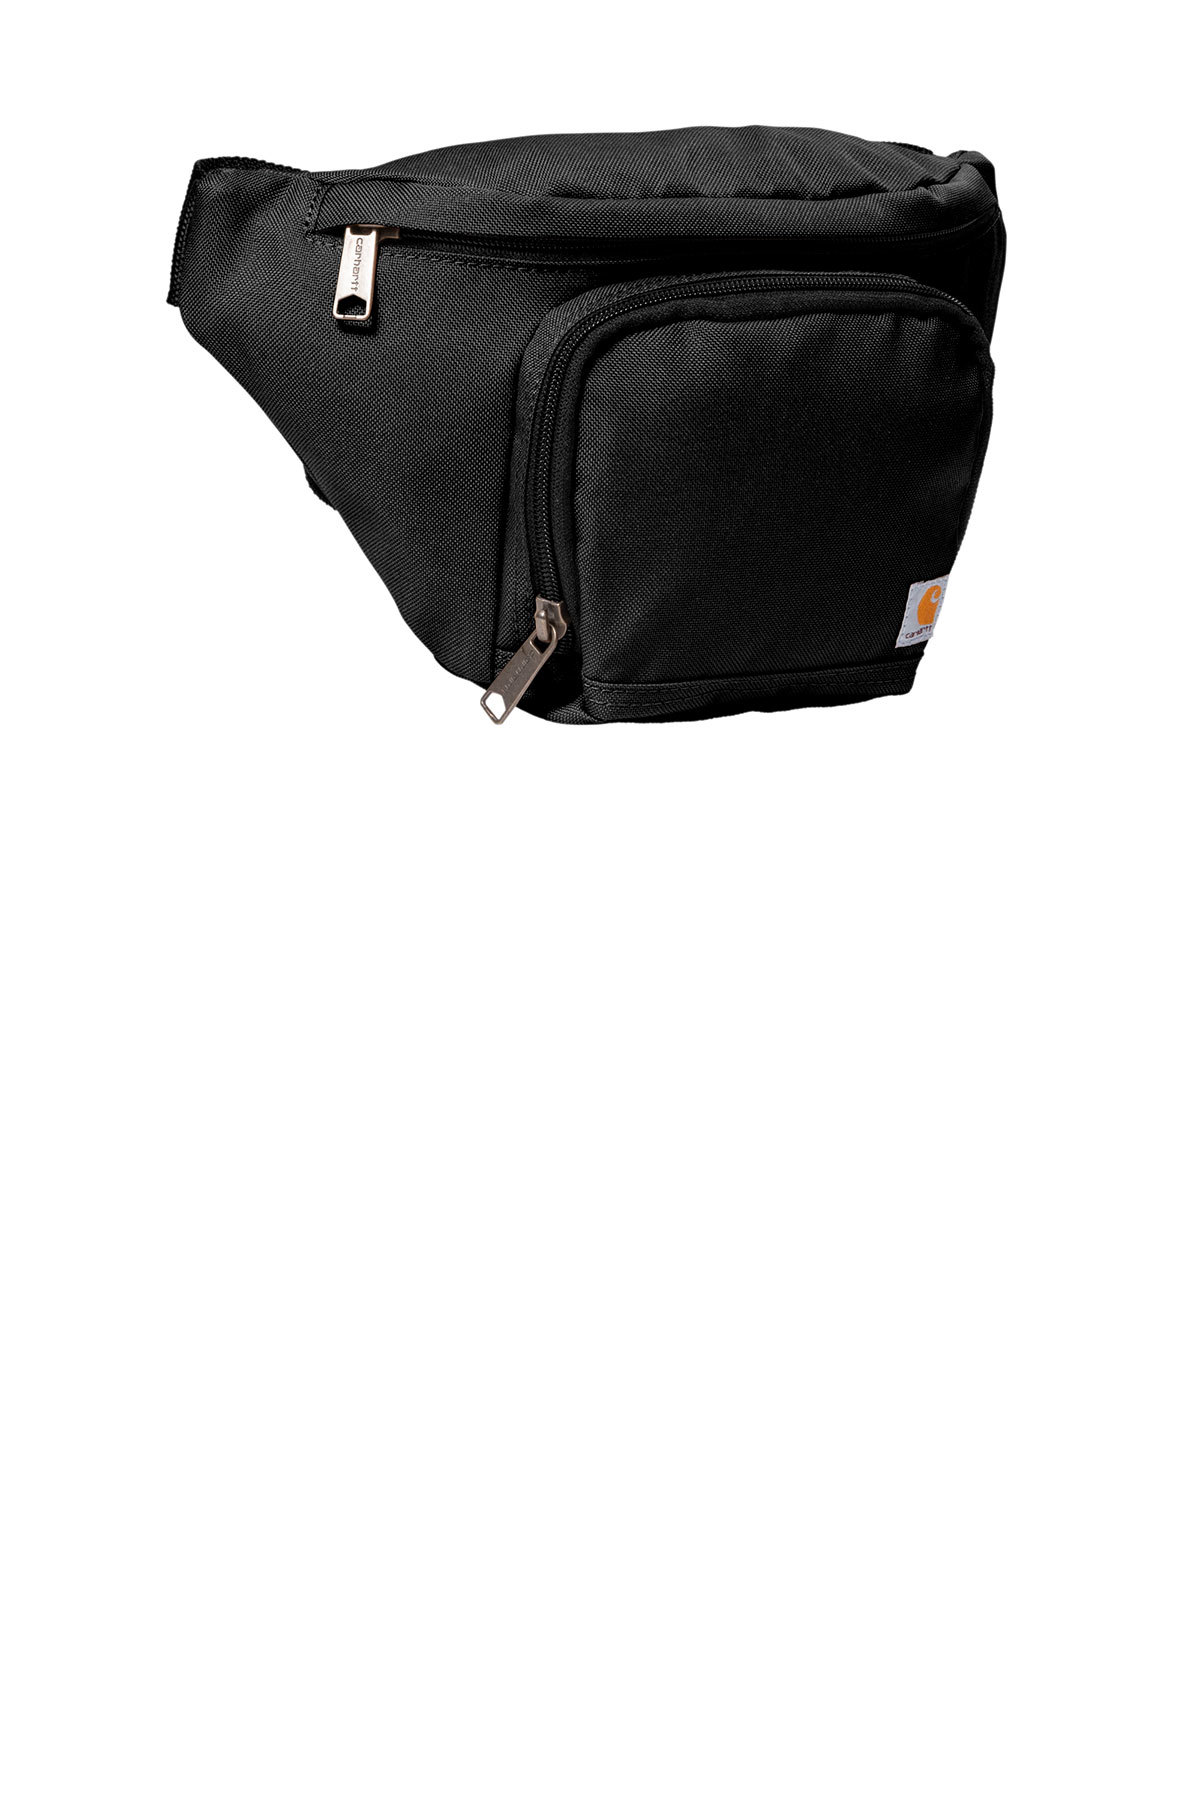  Carhartt Unisex Waist Pack Black One Size